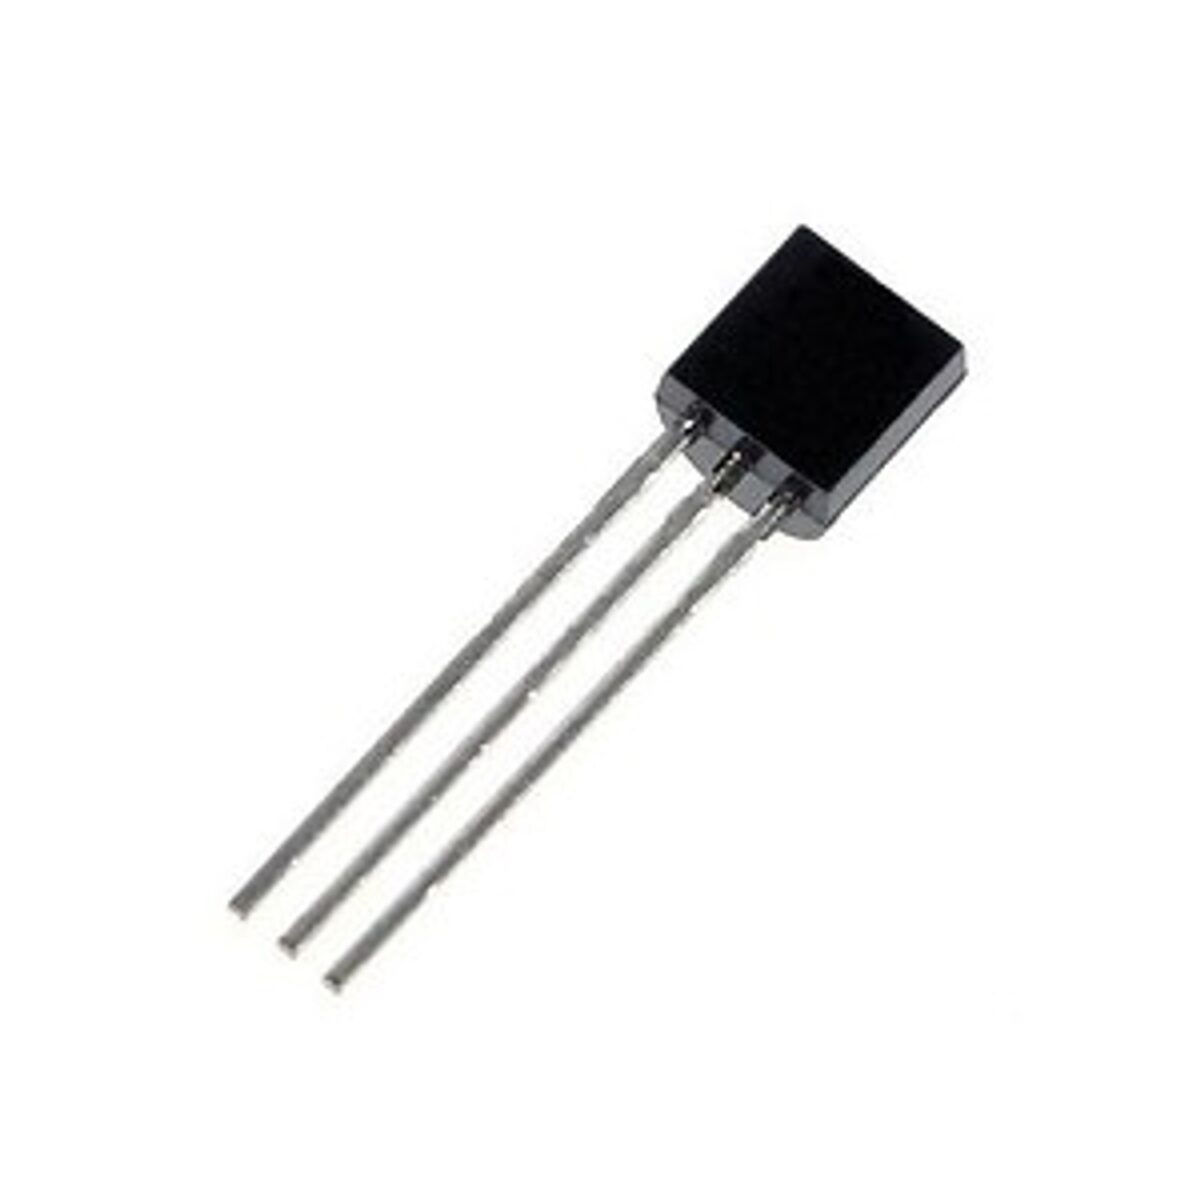 Transistor S9015 2N4403 NPN 40V 0.1A TO92